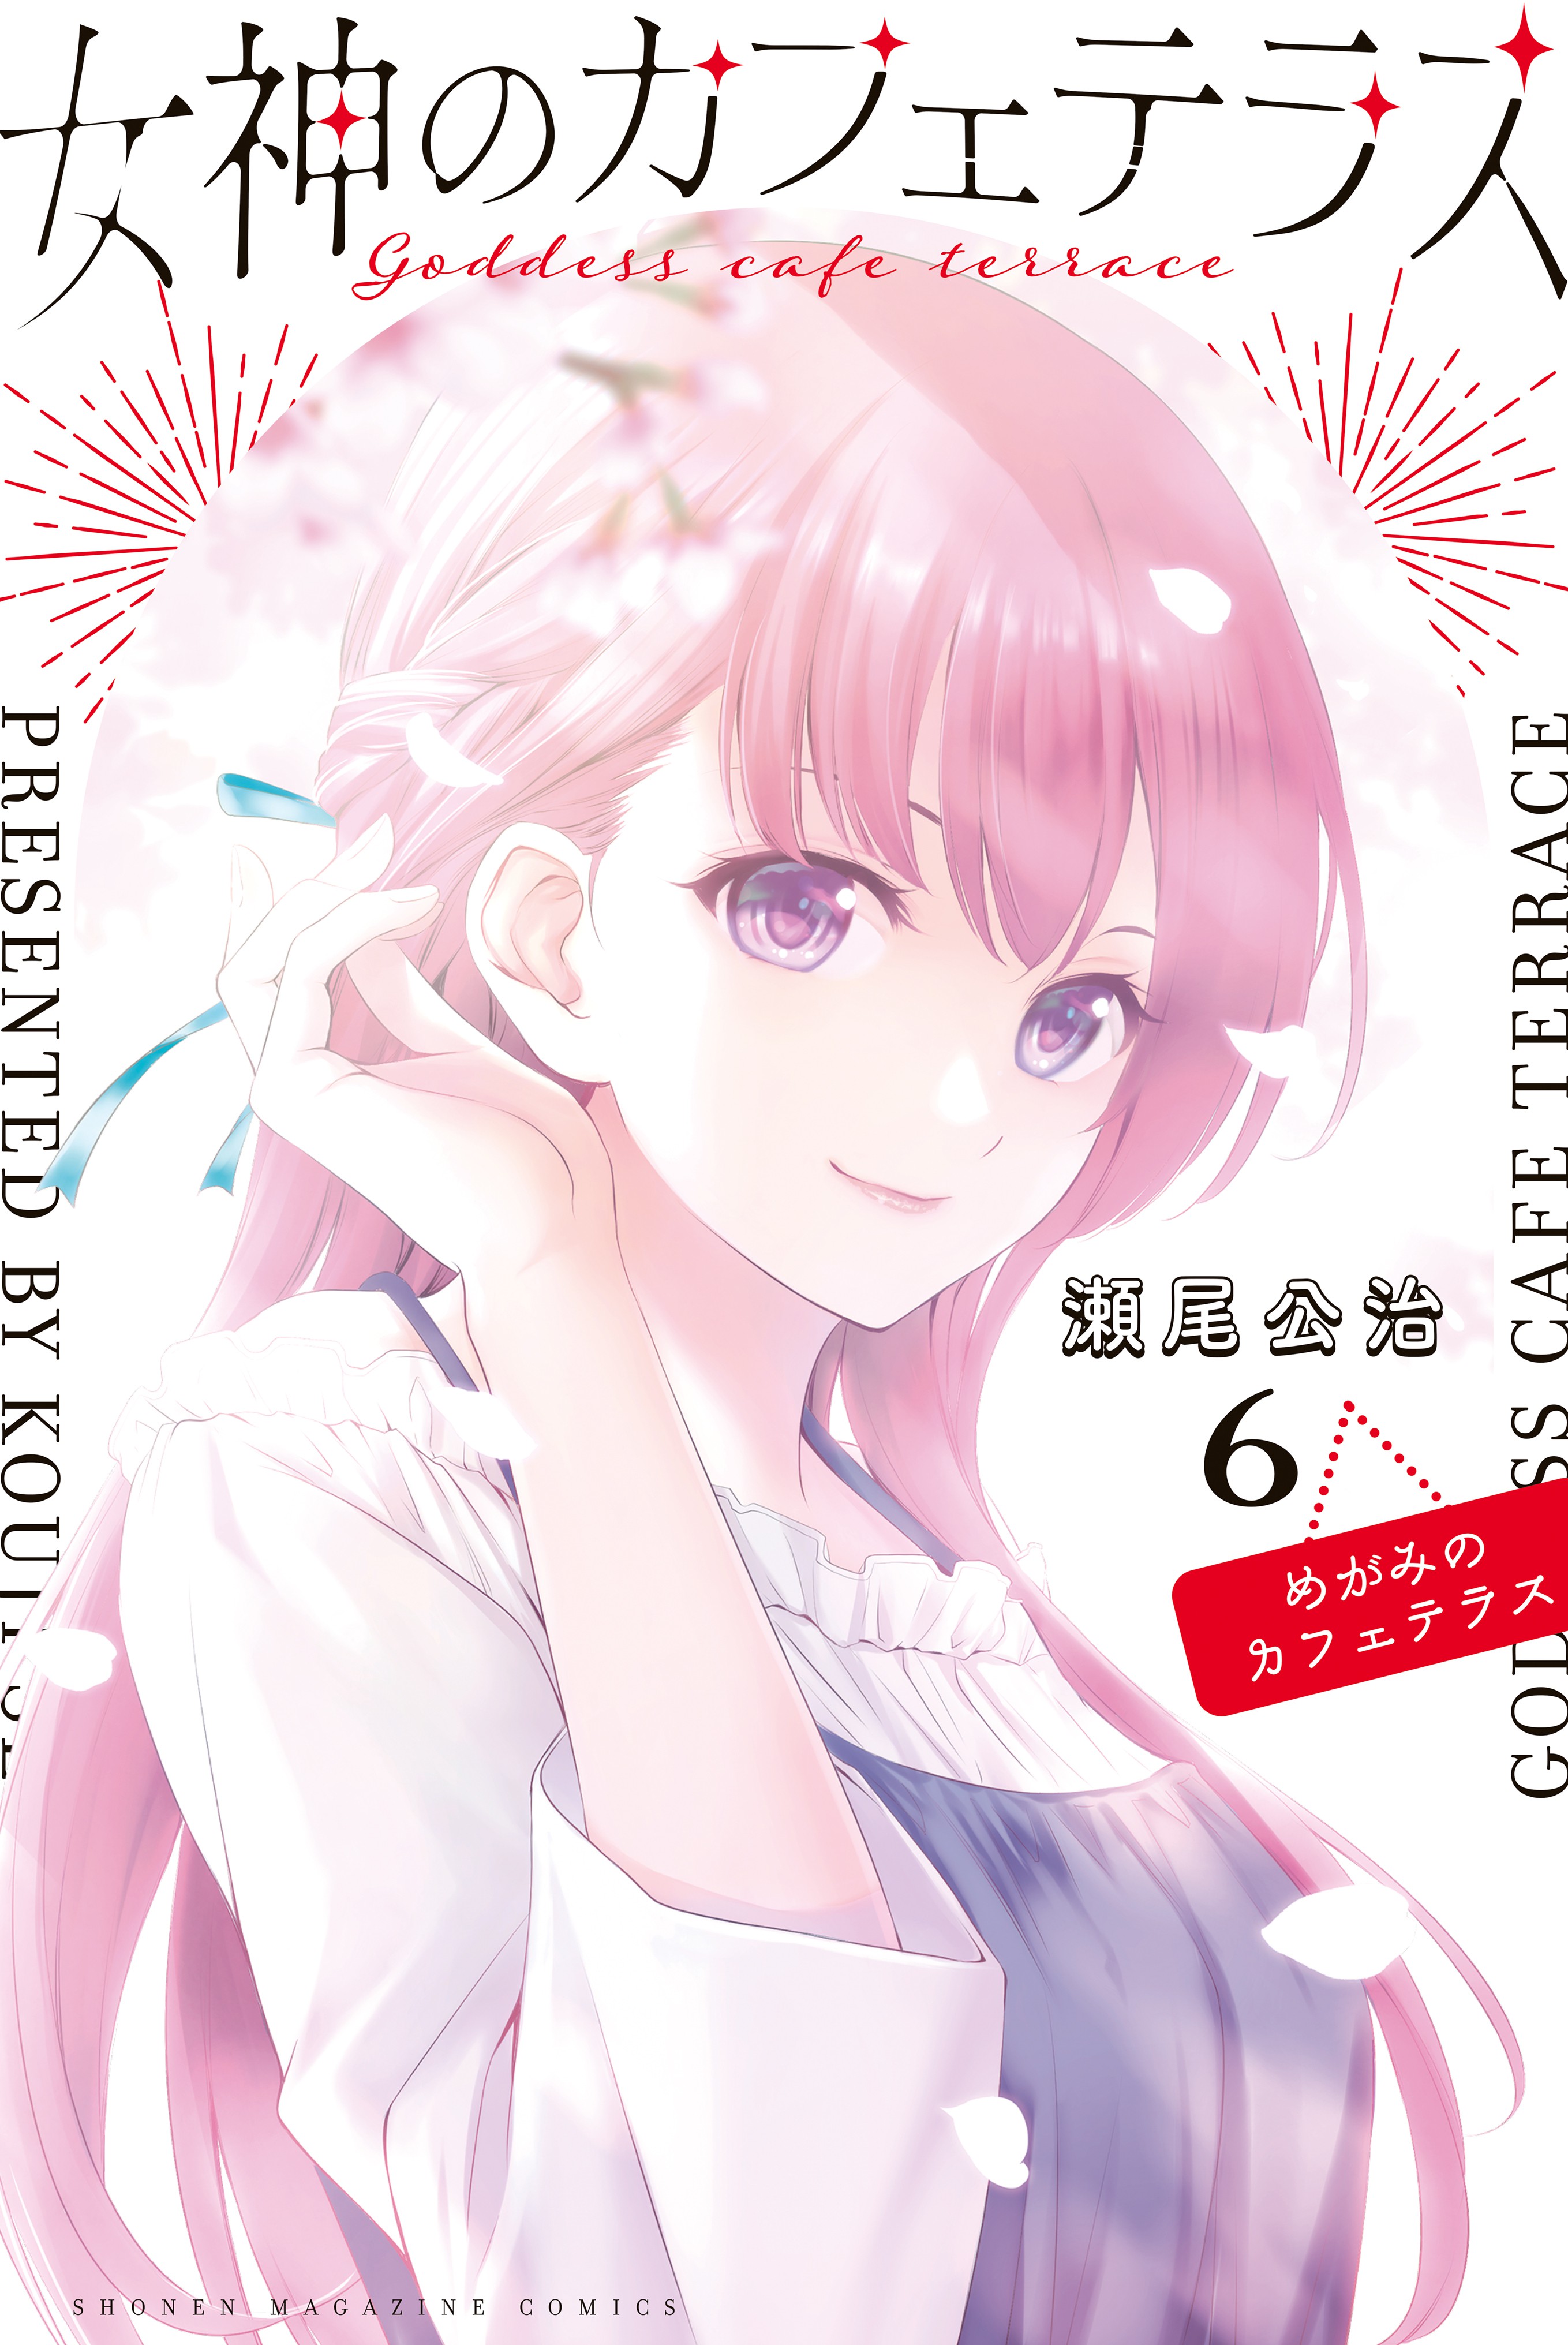 Goddess Café Terrace Chapter 119: Release Date, Recap & Spoilers - OtakuKart